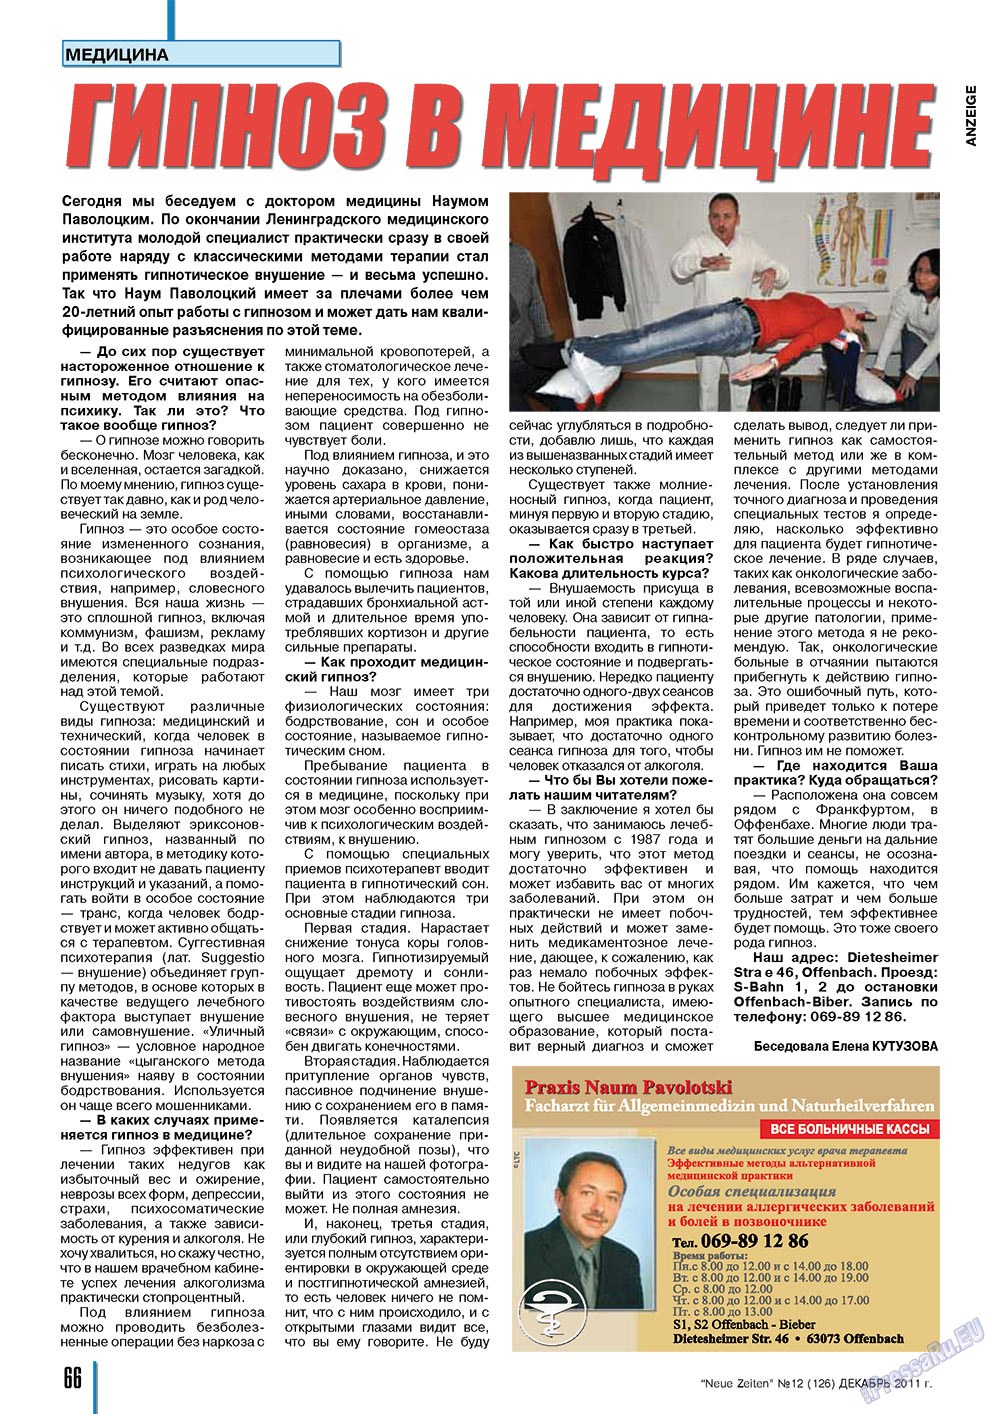 Neue Zeiten (журнал). 2011 год, номер 12, стр. 66